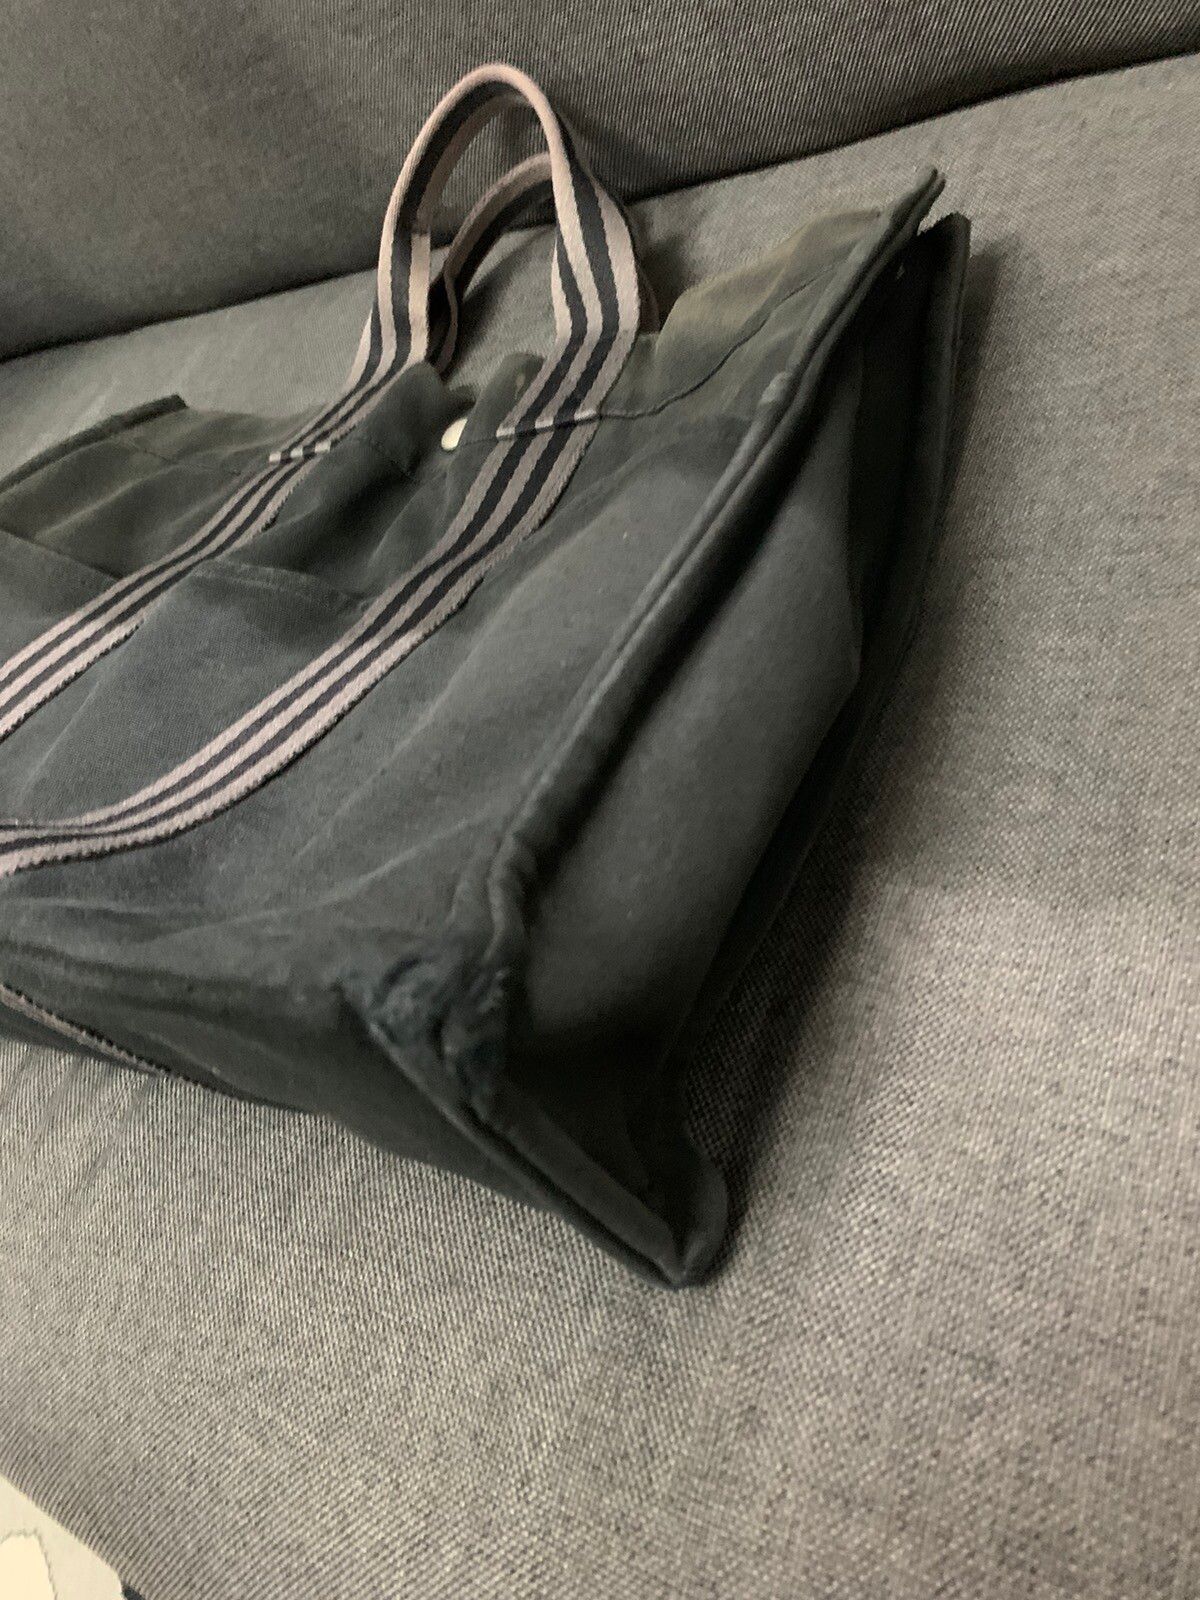 Vintage Faded Distressed Hermes Bag Tote bag - 8